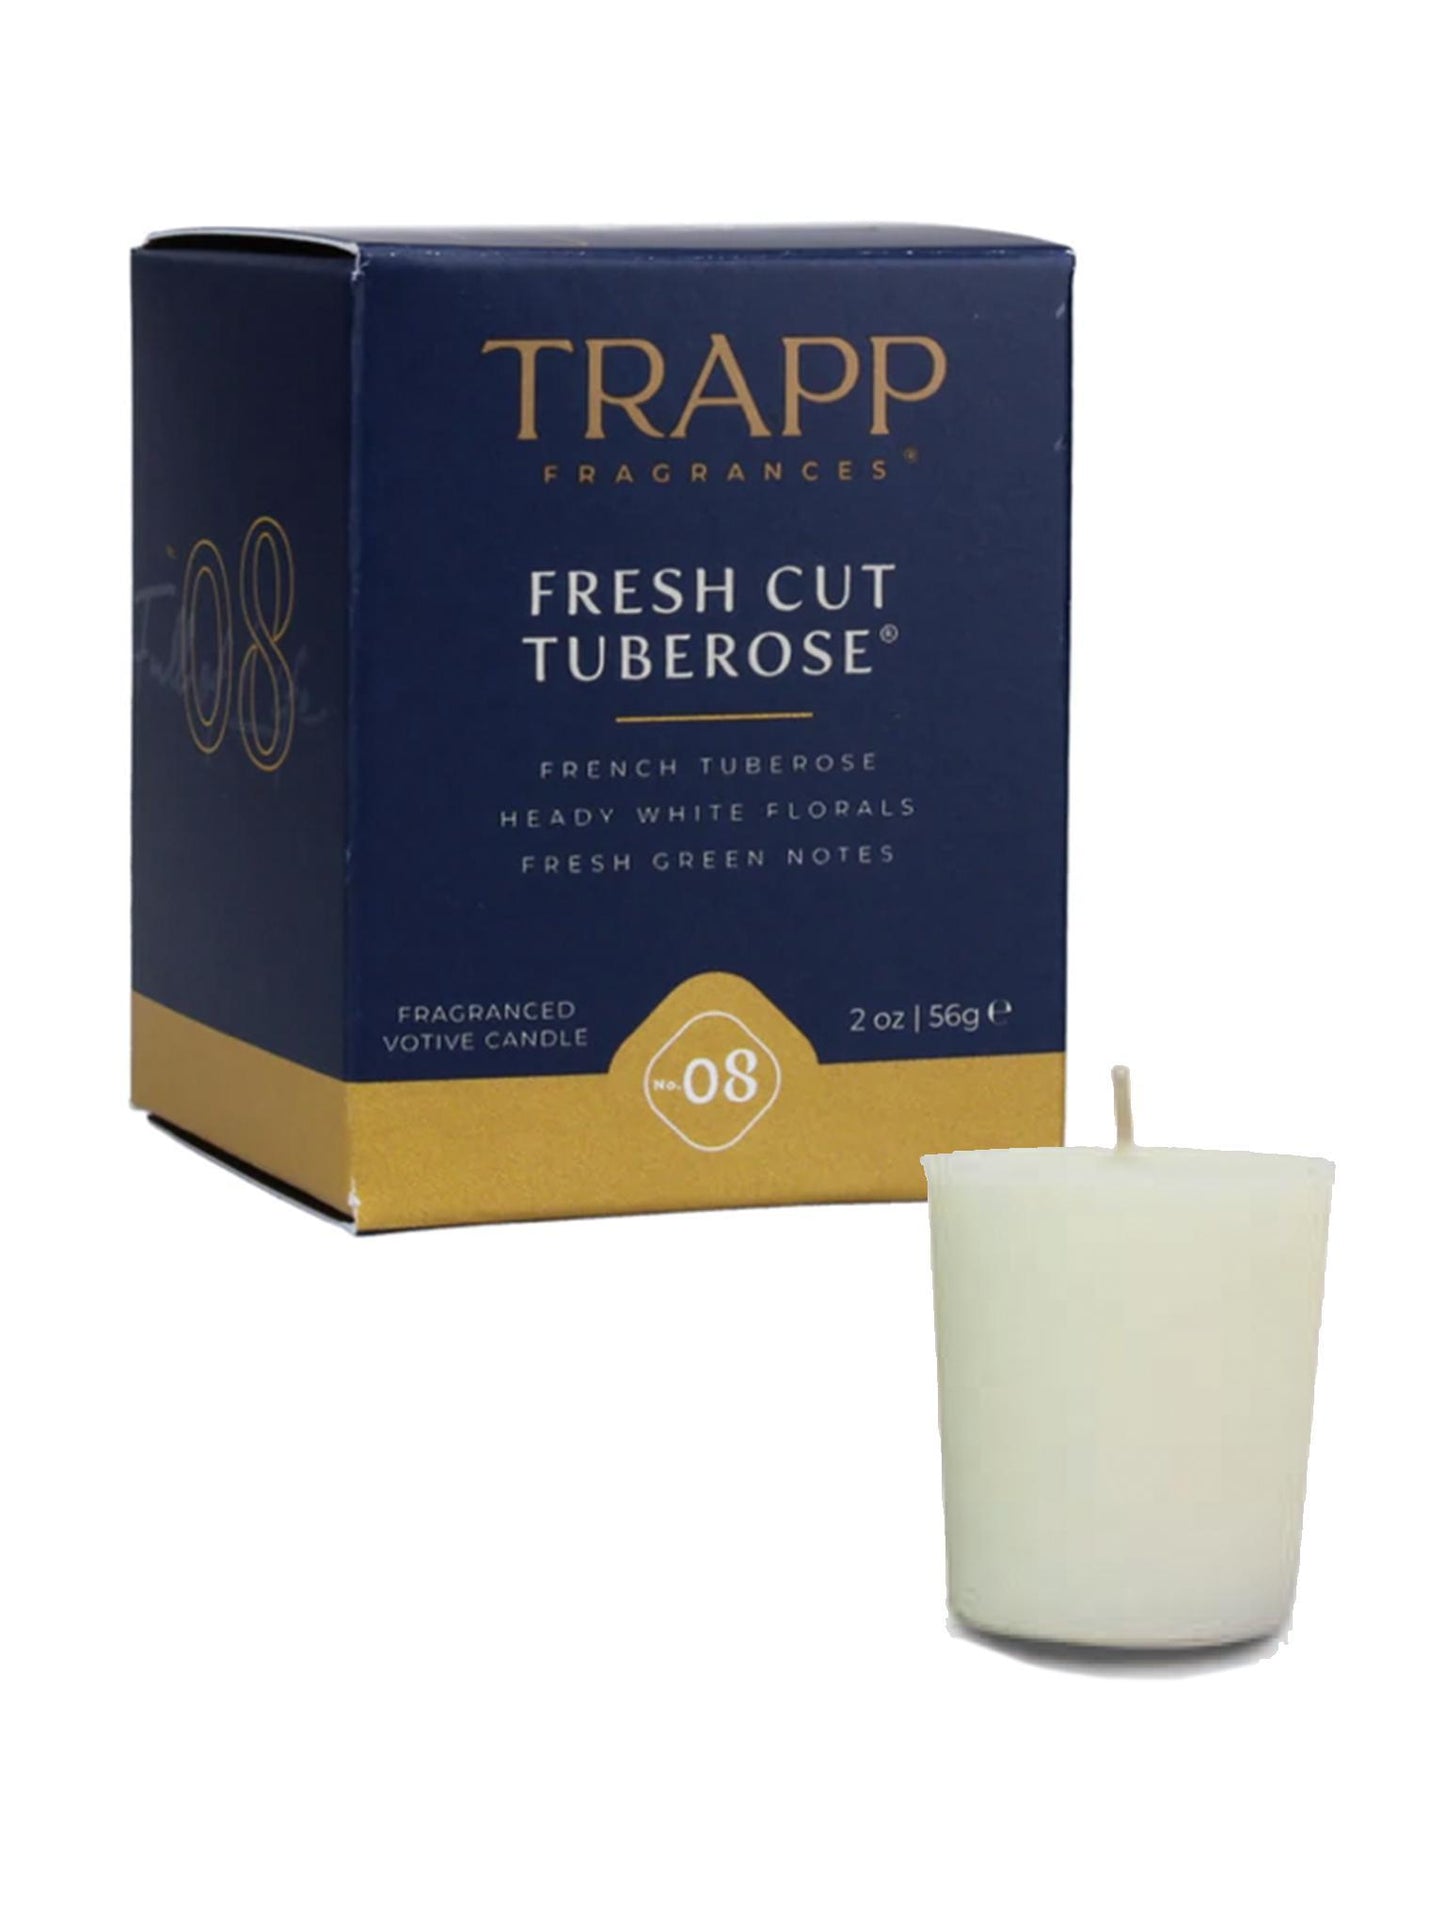 Trapp Fresh Cut Tuberose Votive Candle